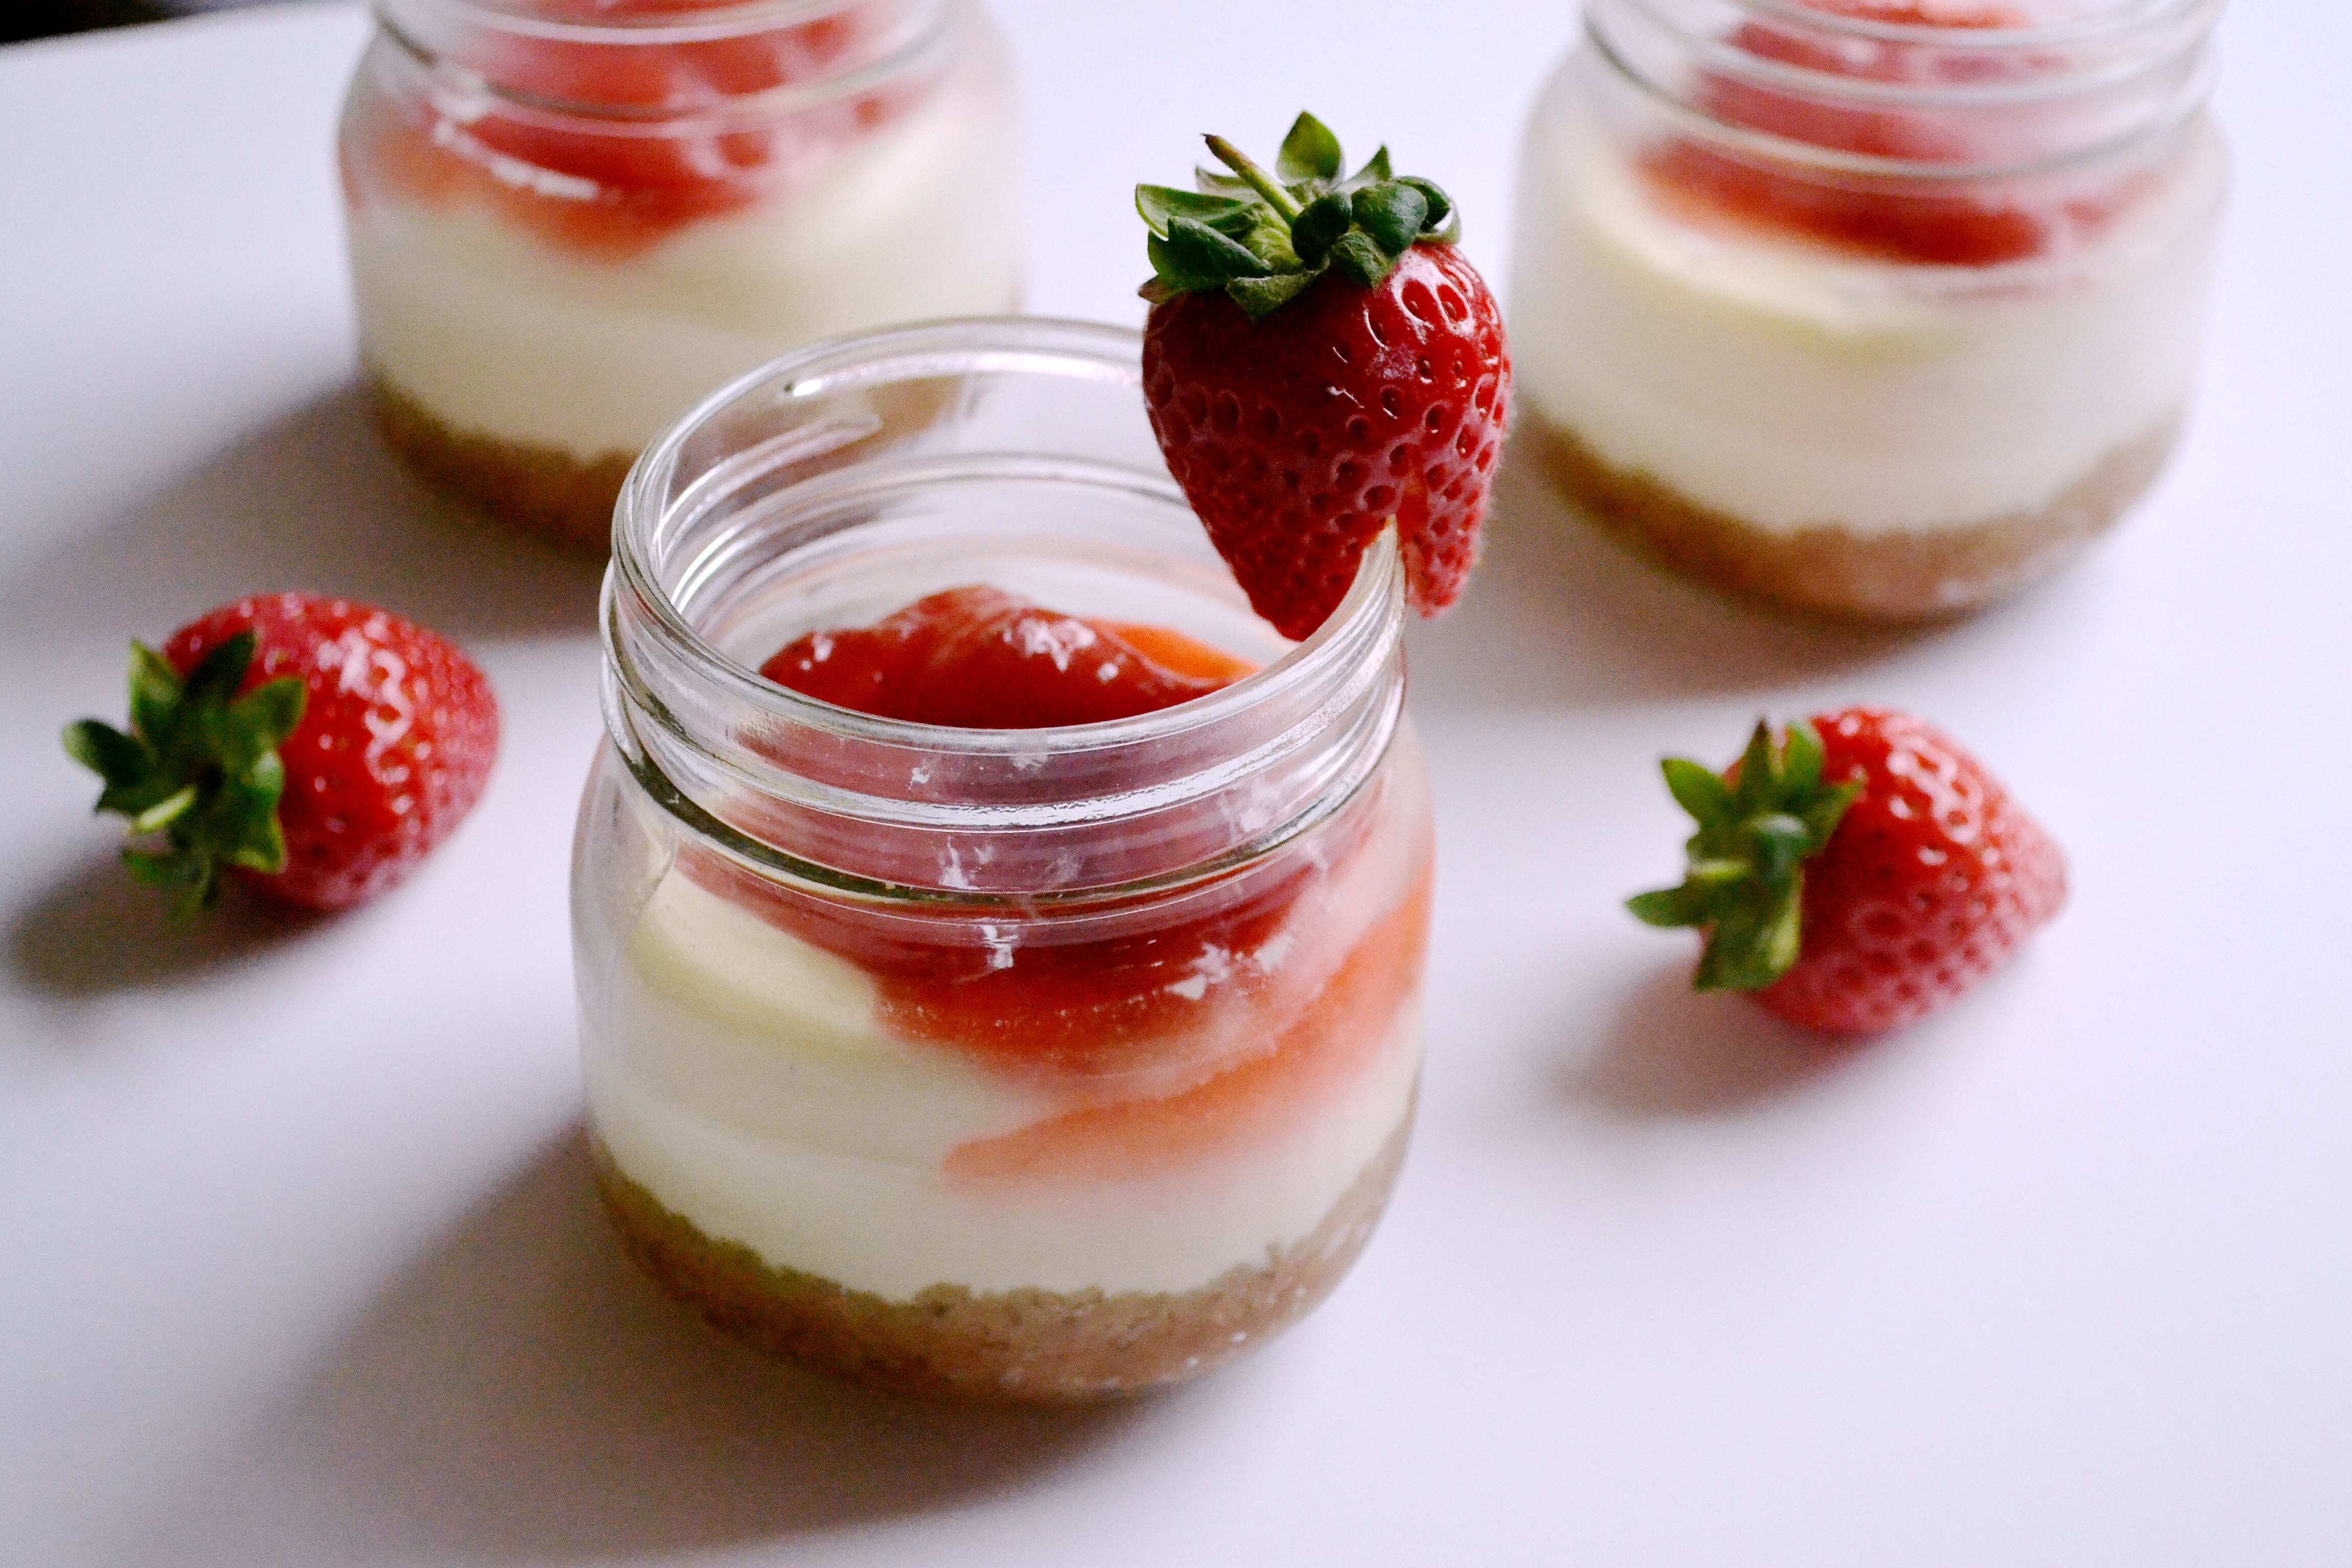 Strawberry Cheesecake In a Jar